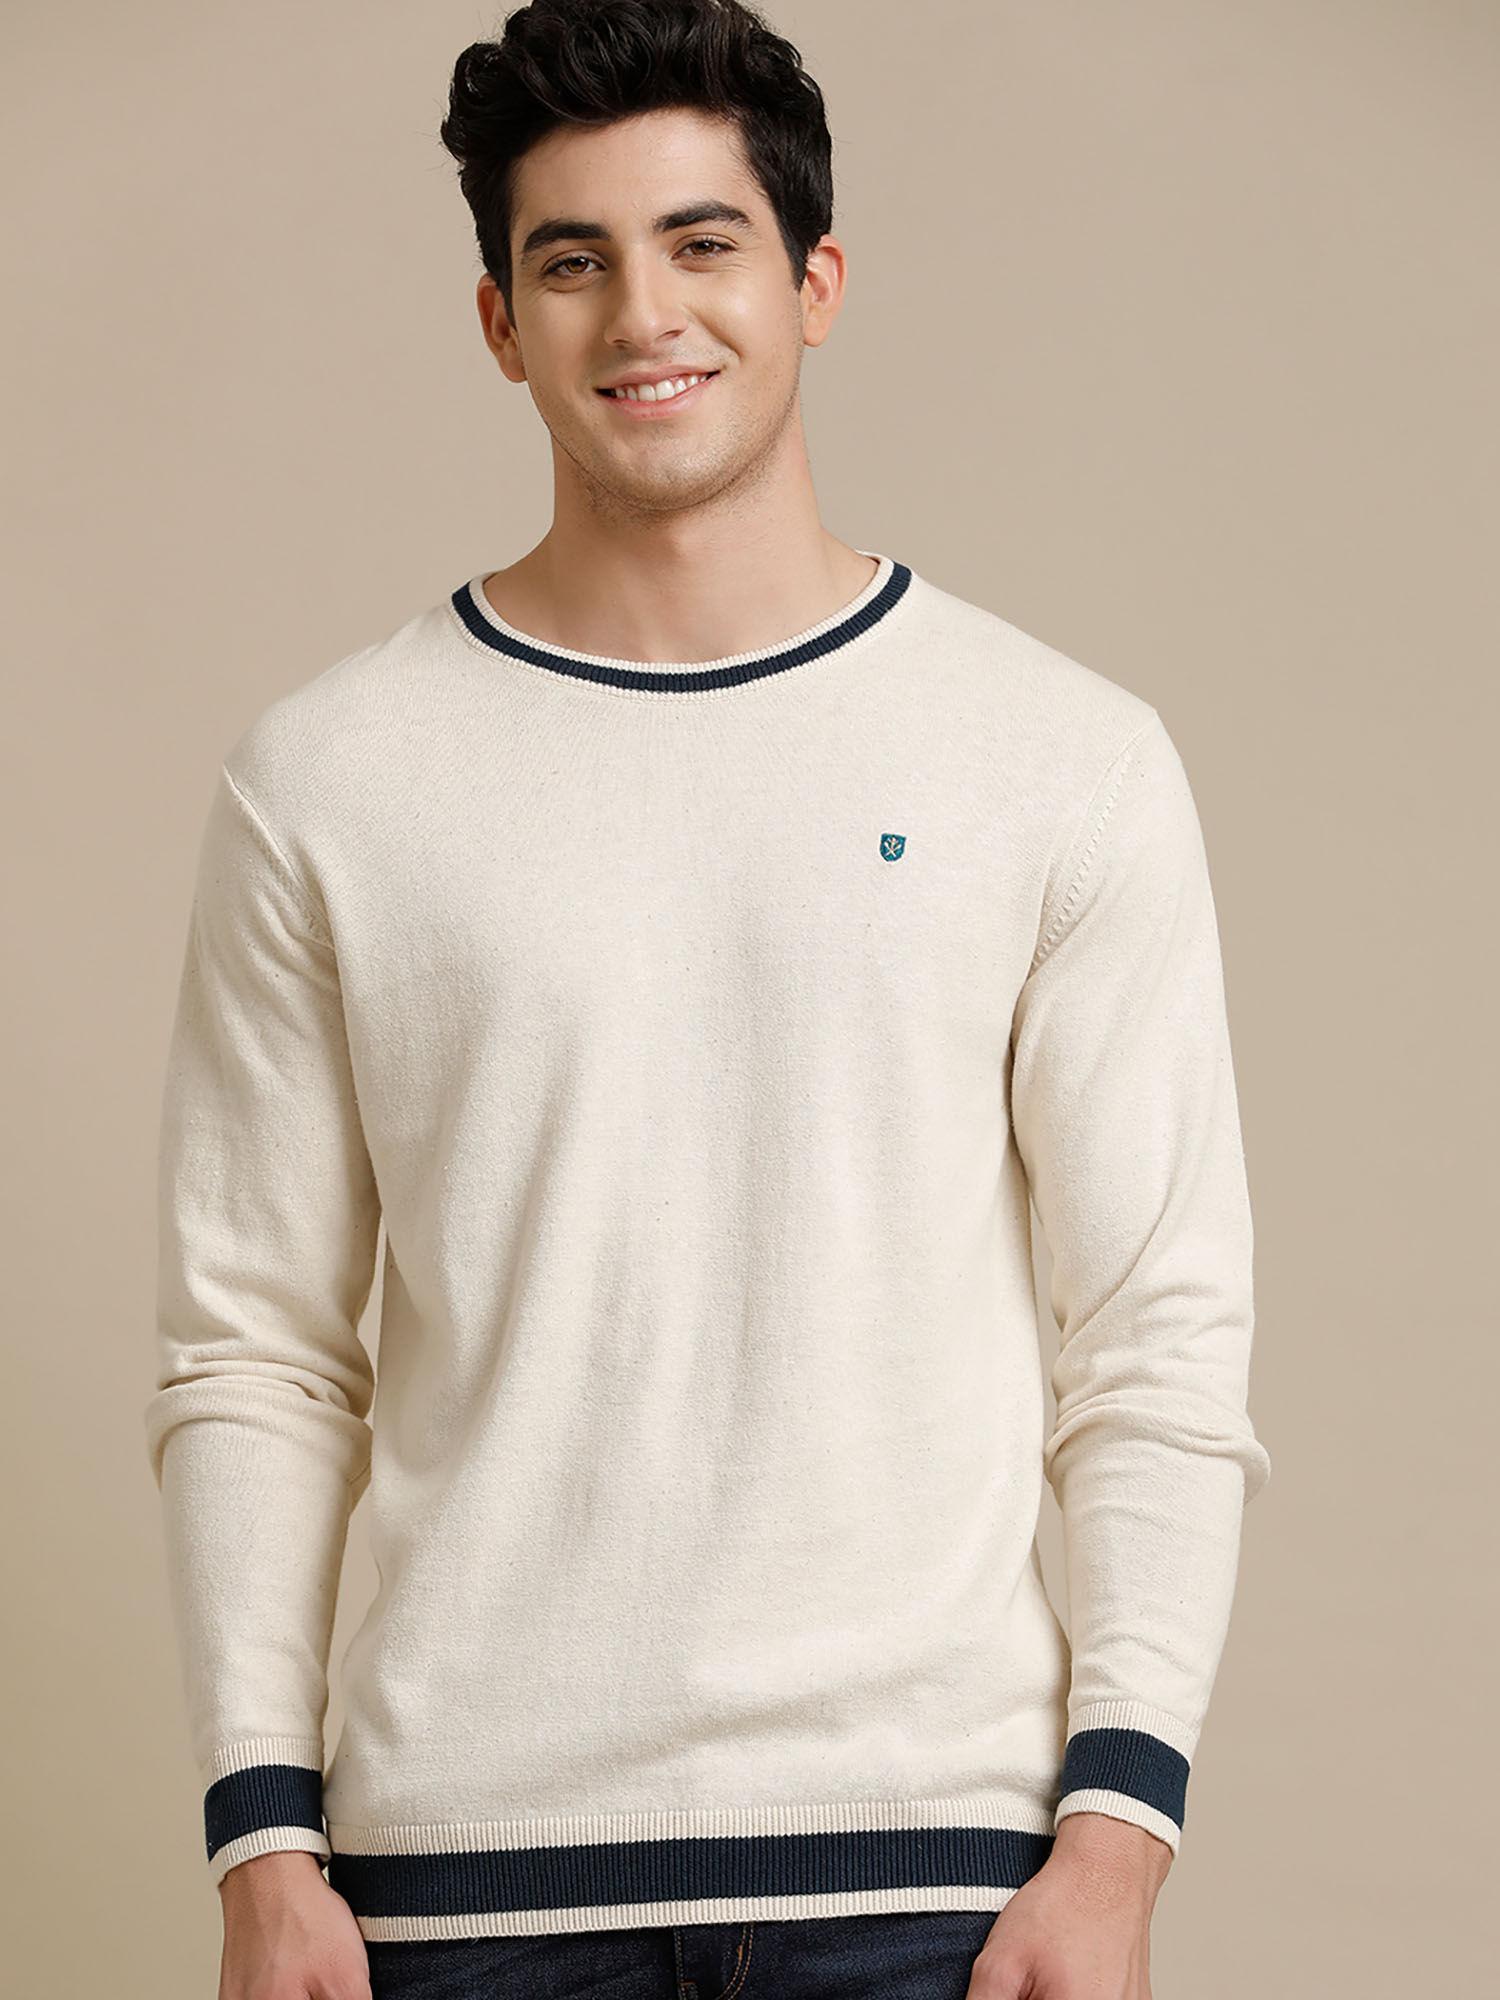 flat knit crew neck off white solid full sleeve t-shirt for men